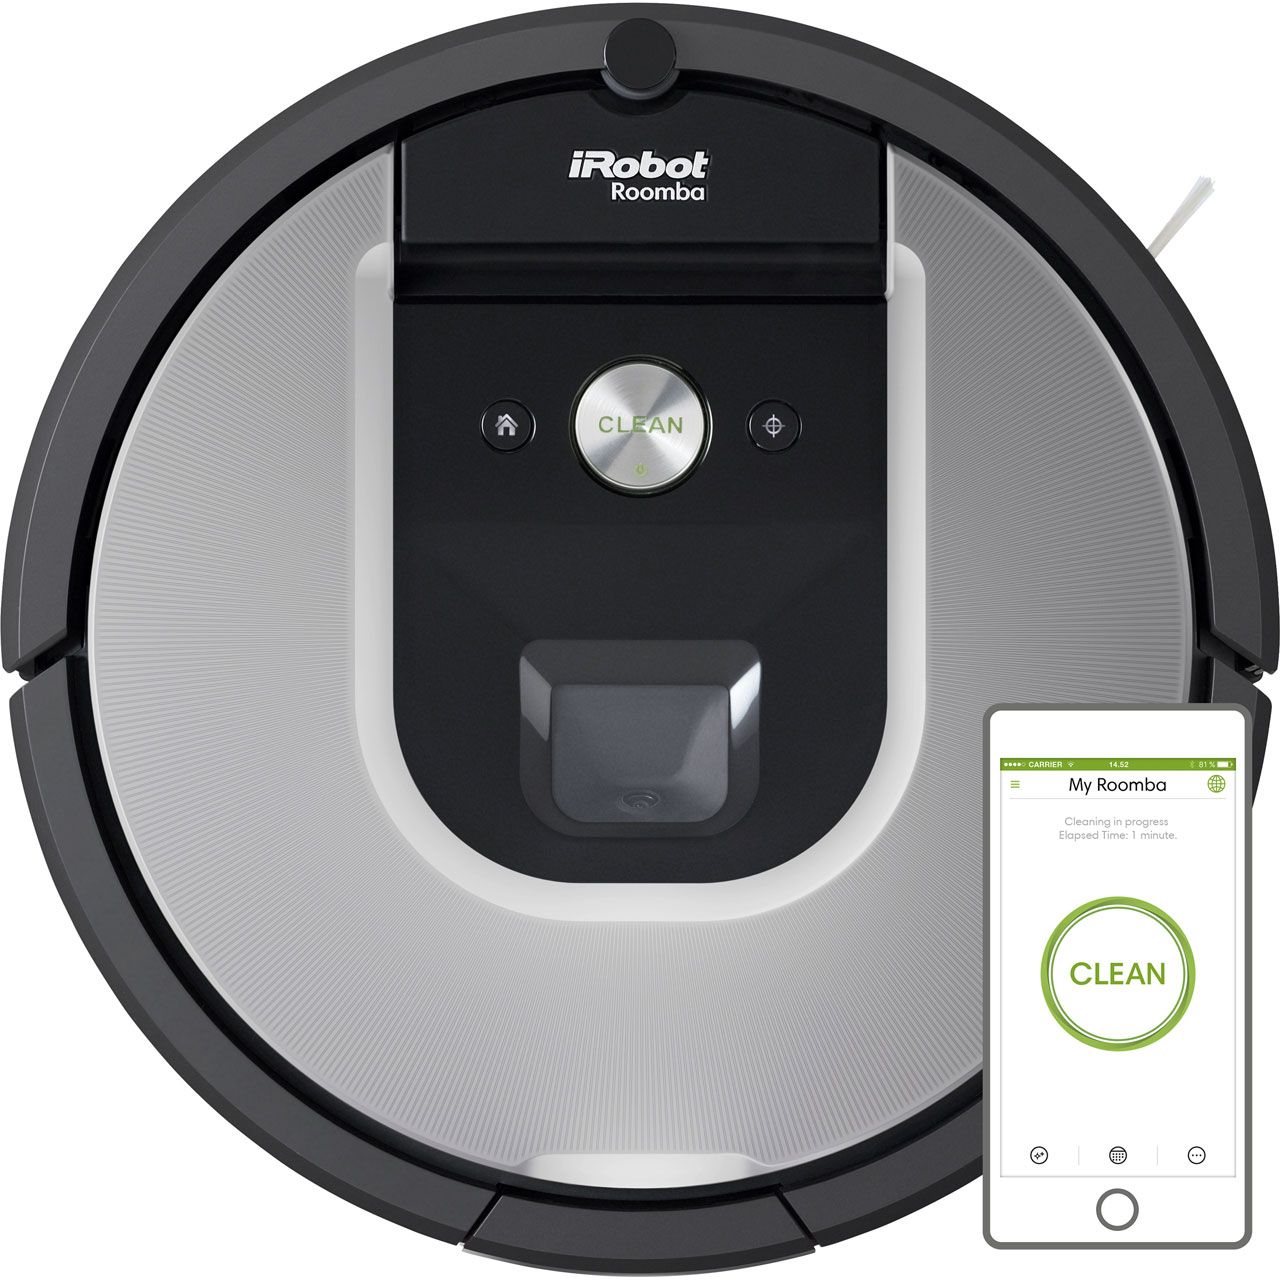 iRobot Roomba 965 Robotic Vacuum Cleaner Review